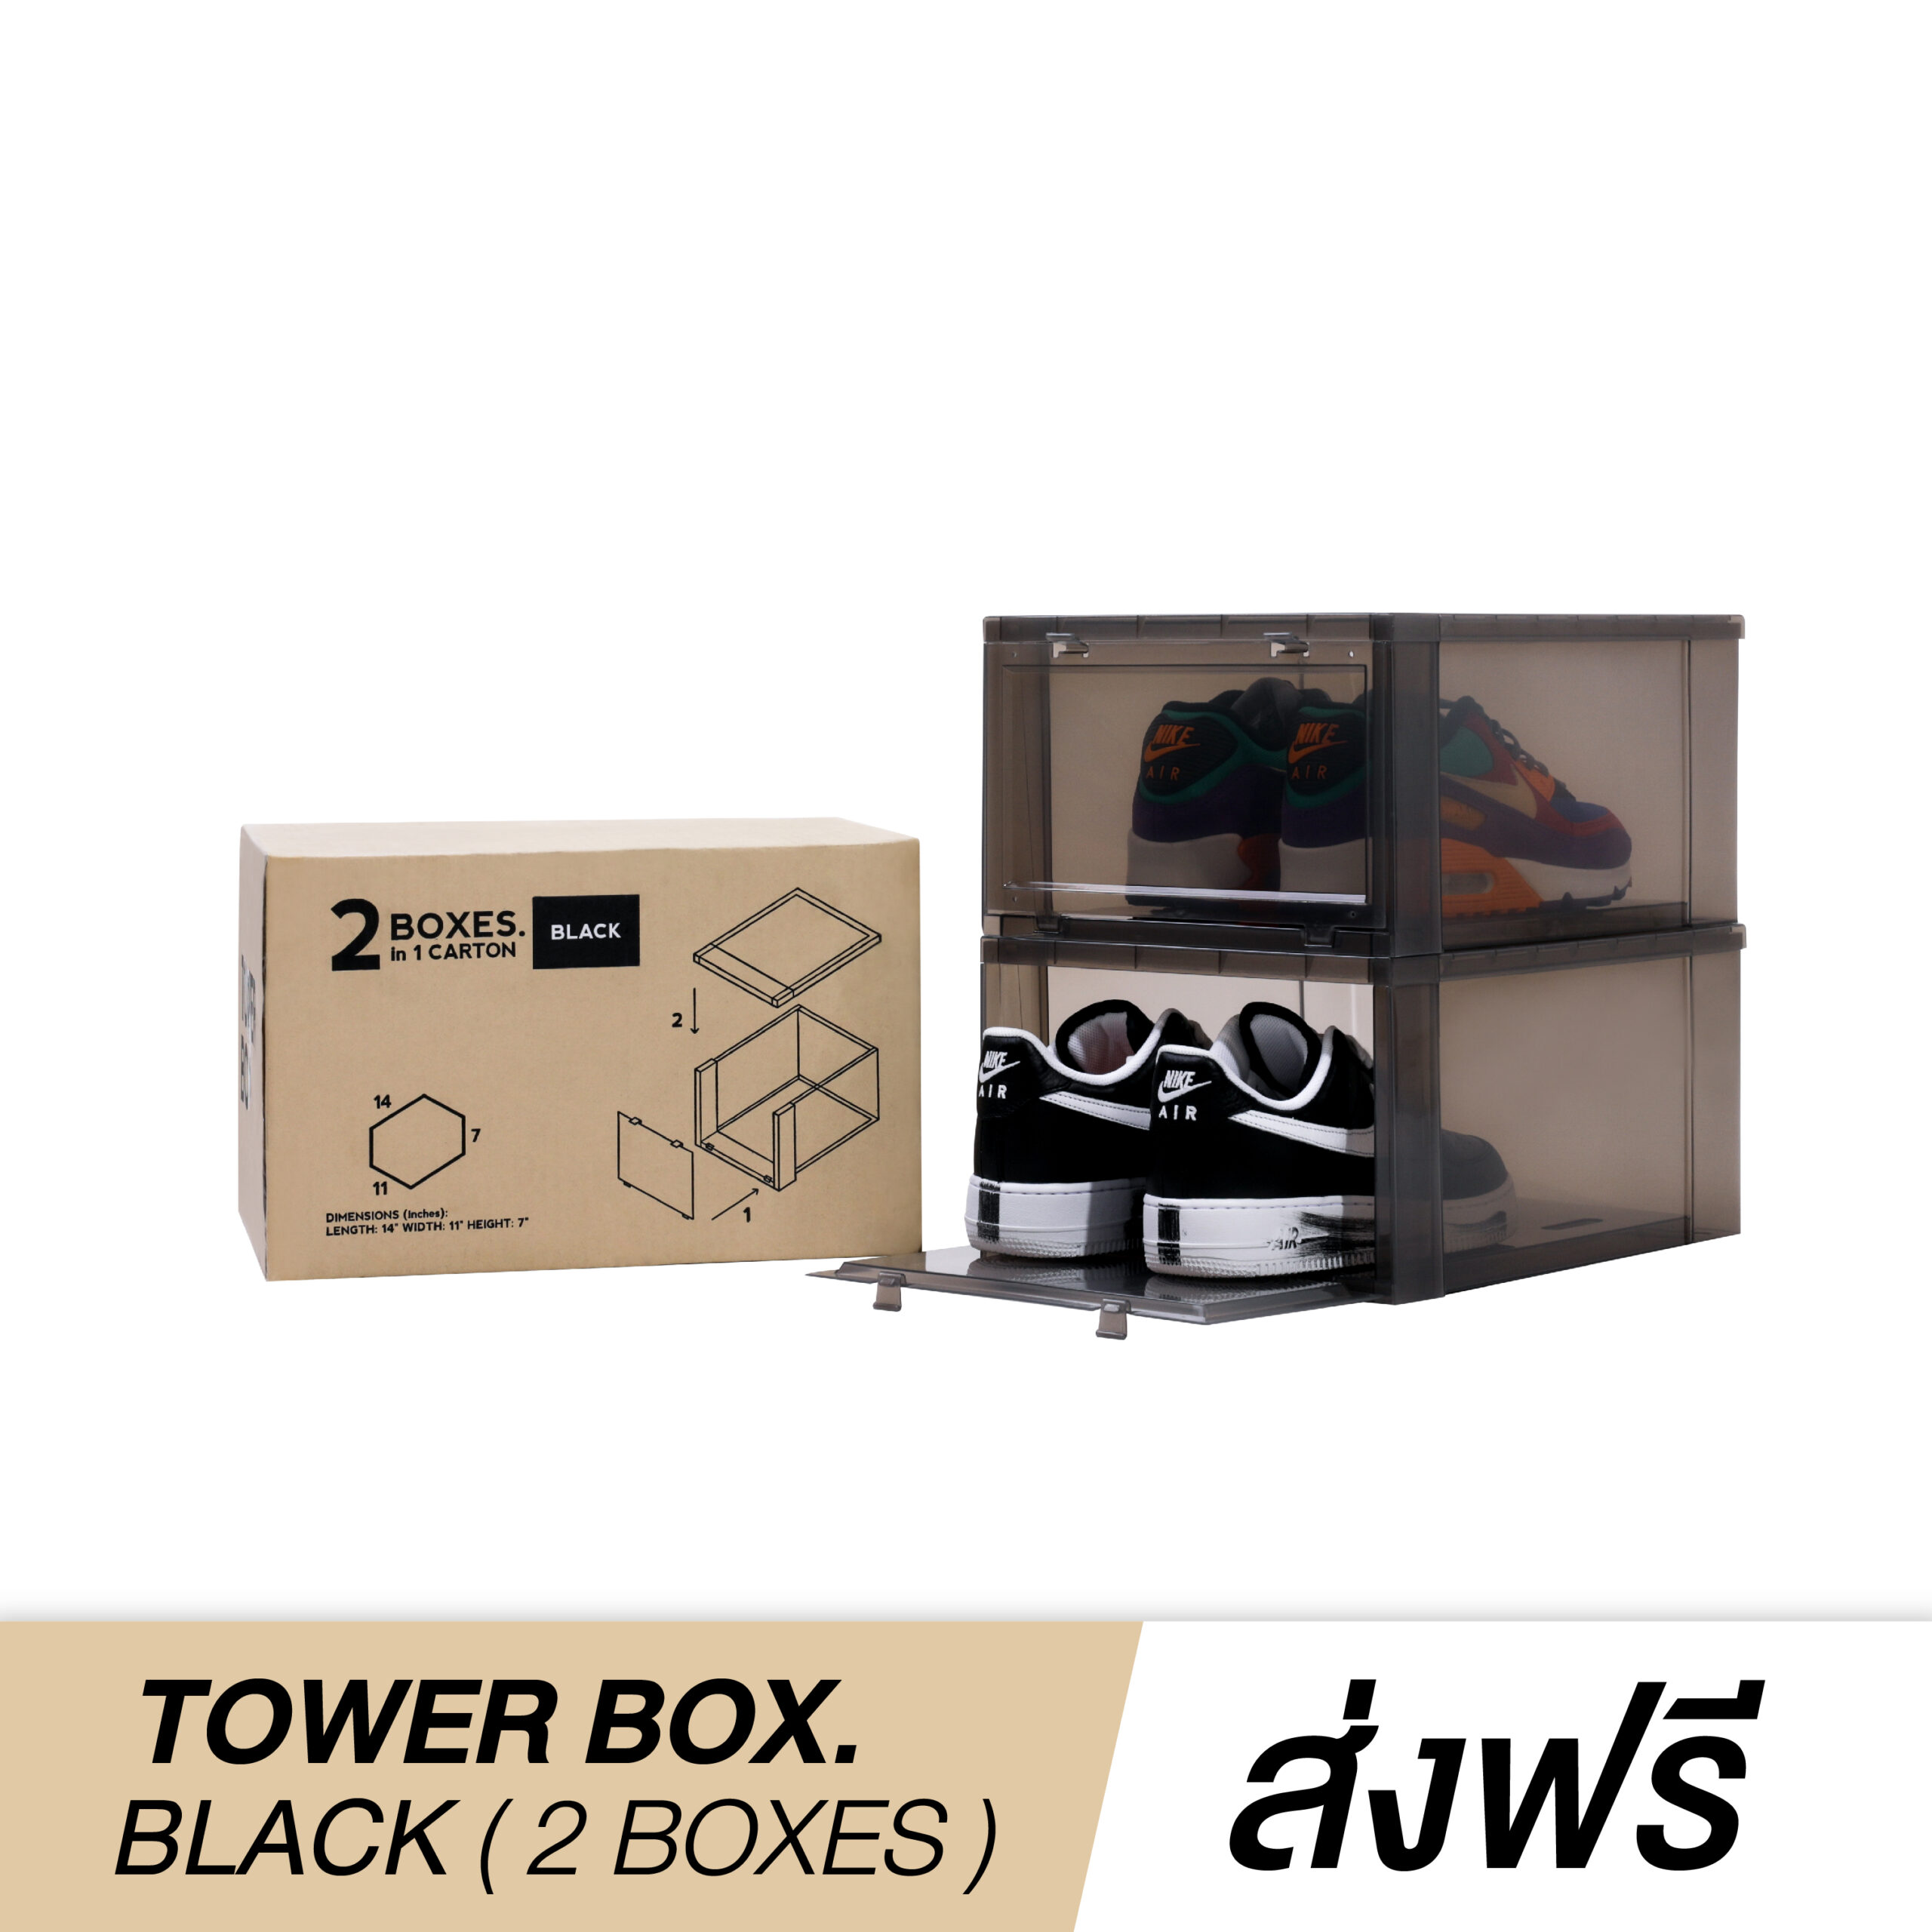 TOWER BOX STANDARD “BLACK” (2 BOXES) – Tower Box